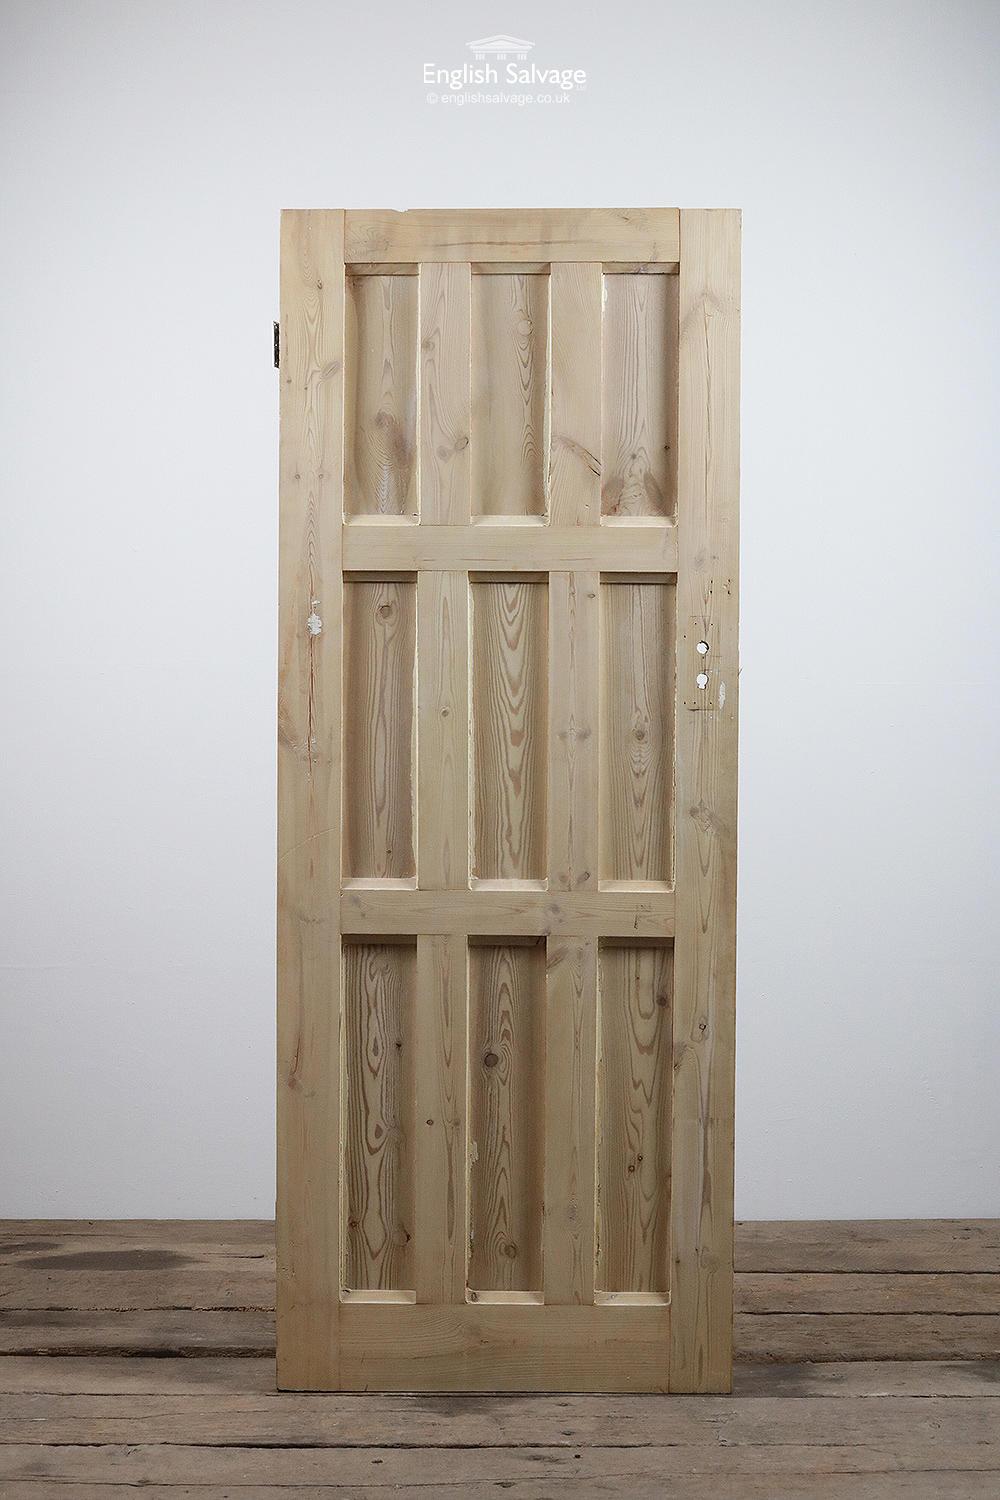 European Salvaged Nine Panel Pine Door, 20th Century For Sale